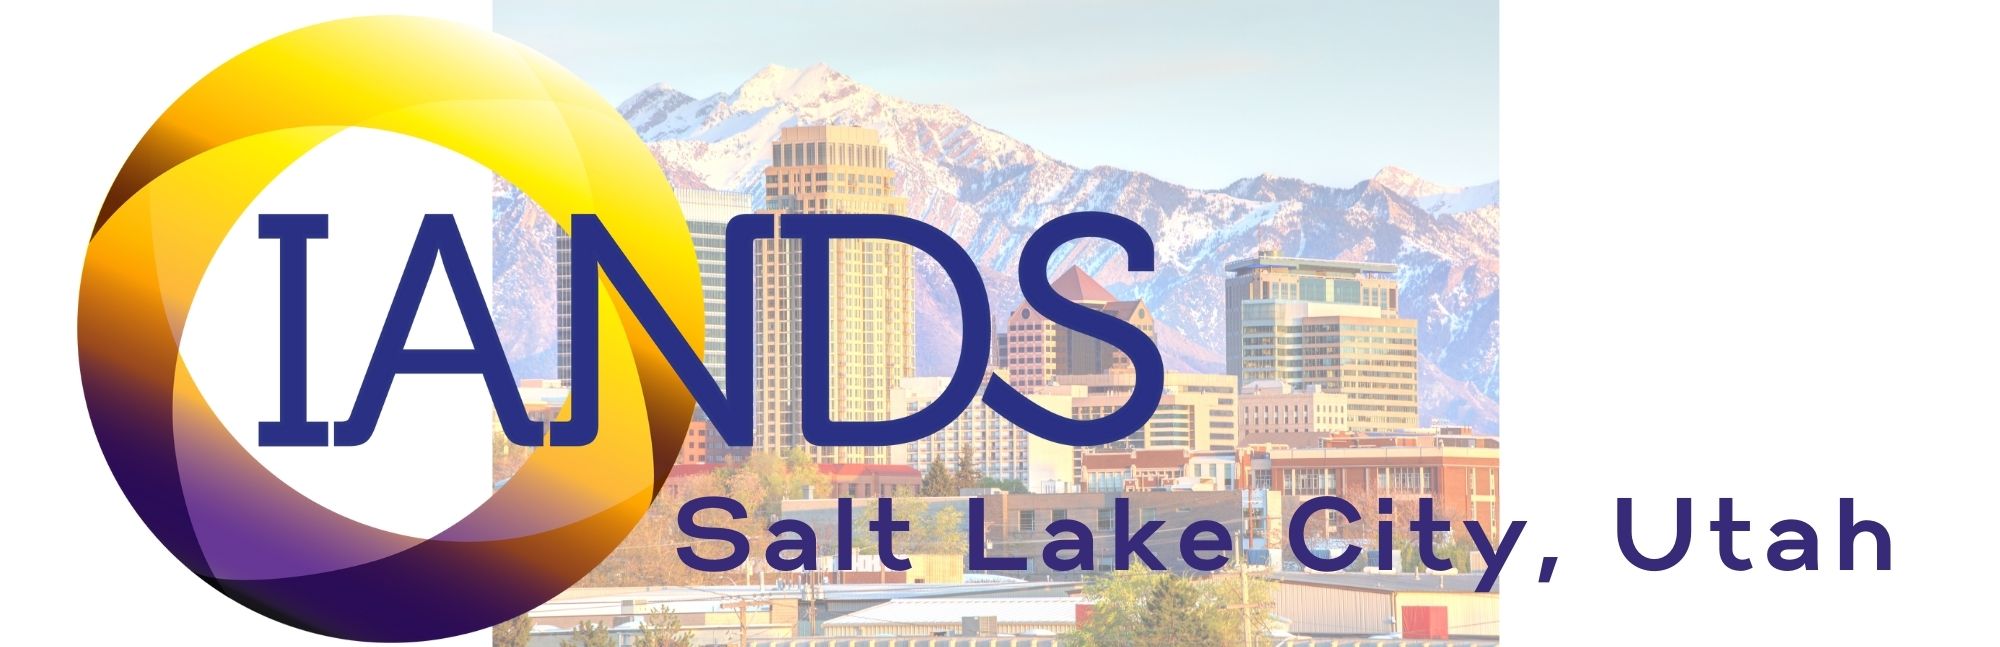 US UtahSalt Lake City IANDS Groups and Events